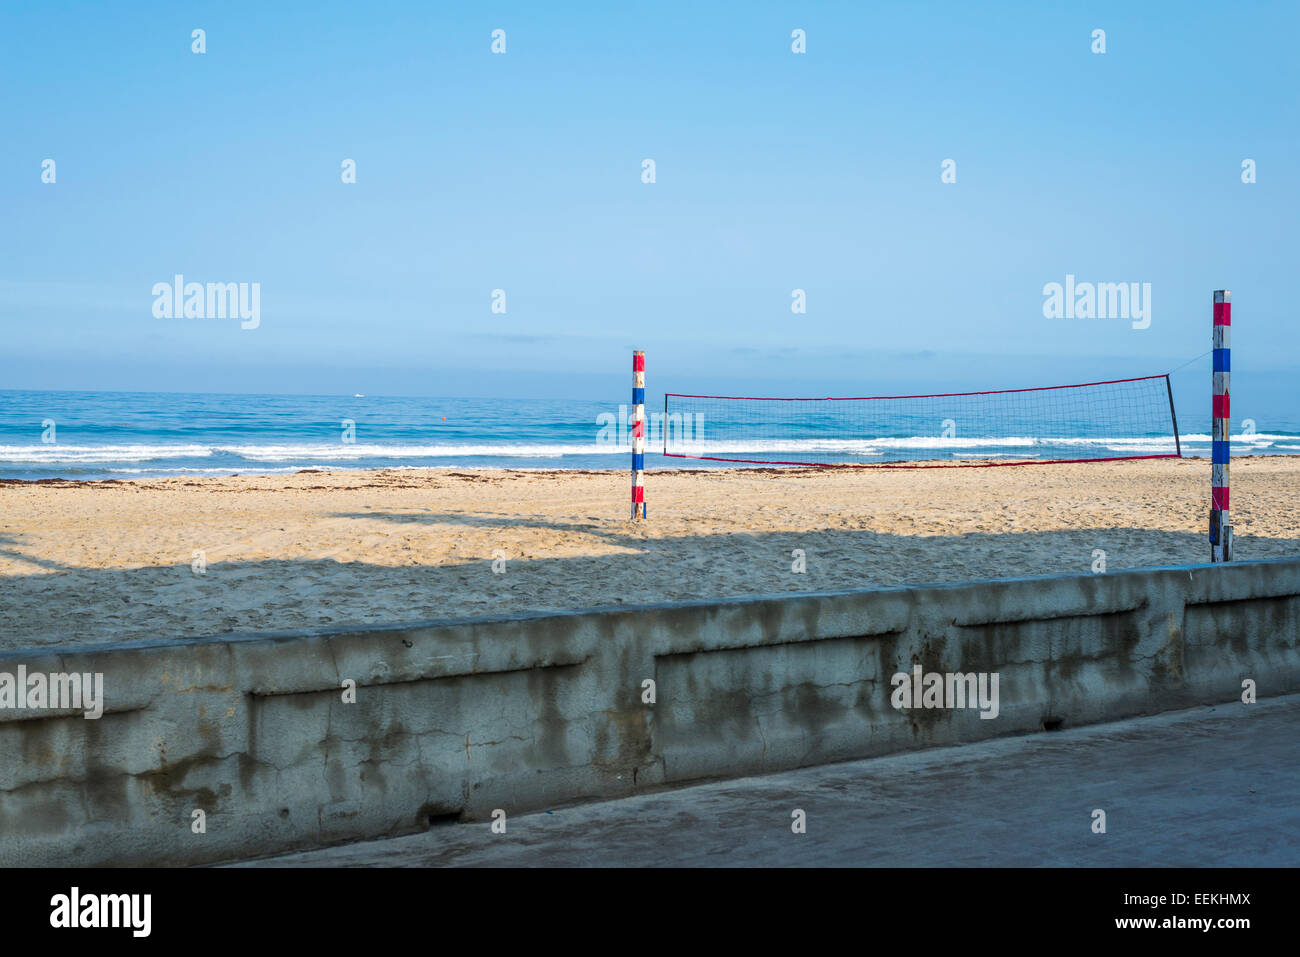 Rouge, blanc et bleu du beach-volley. Mission Beach, San Diego, California, United States. Banque D'Images